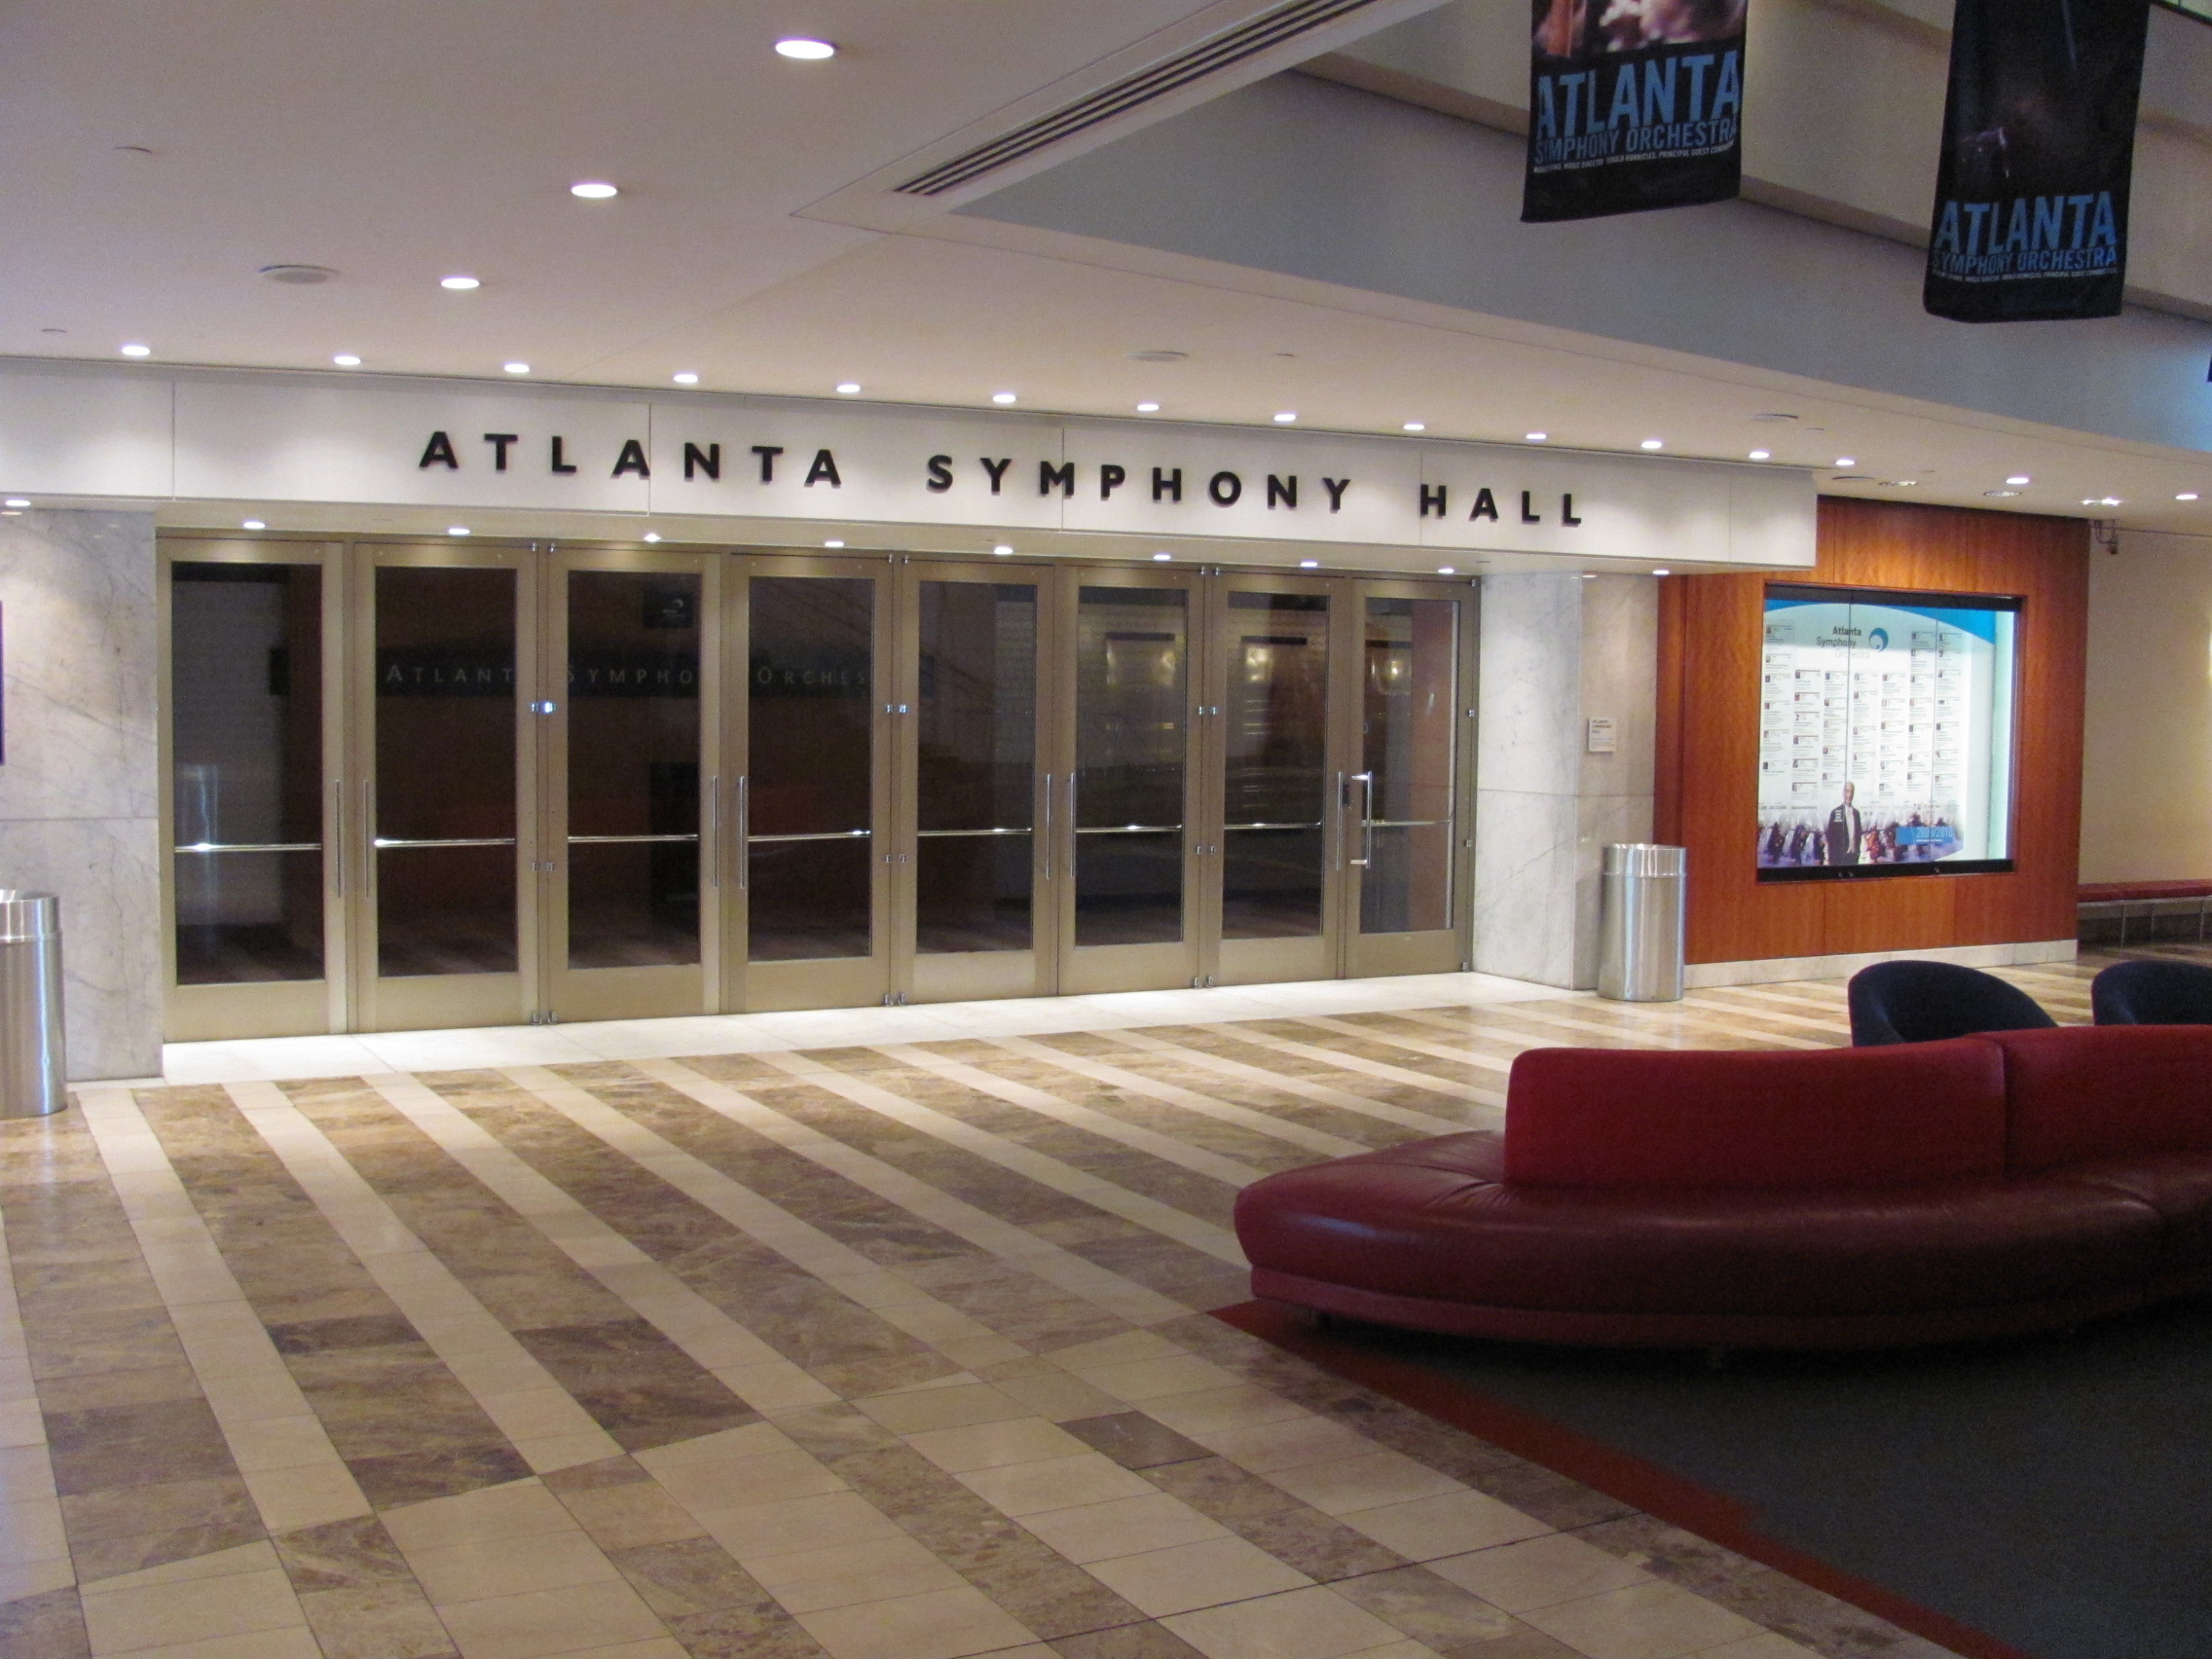 Atlanta Symphony Hall 2021 show schedule & venue information Live